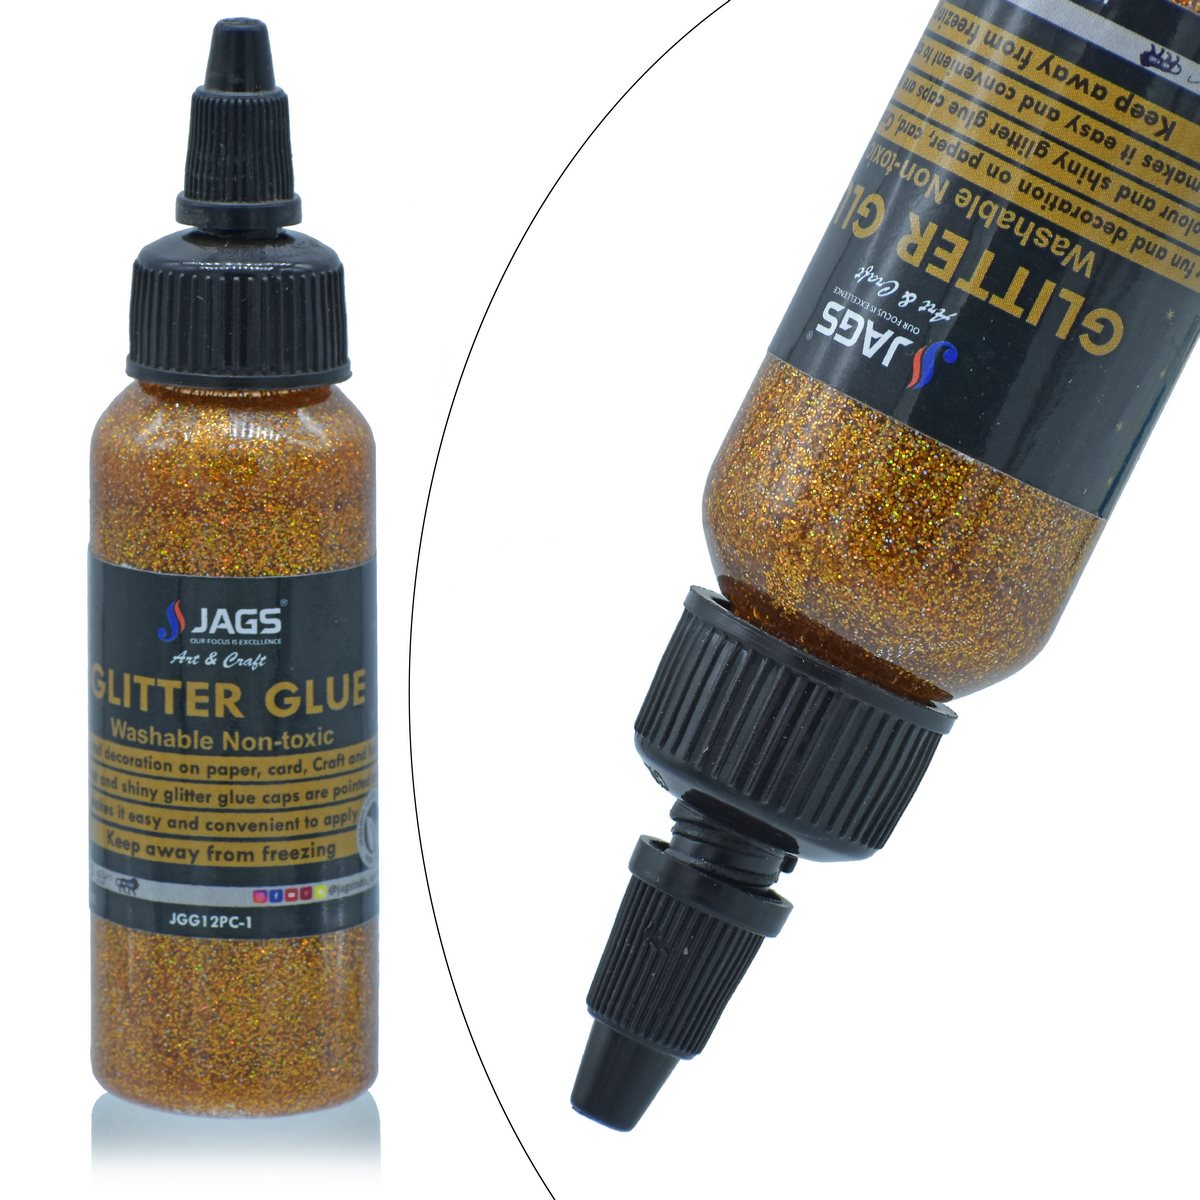 jags-mumbai Glue Glitter Glue Art Shaker 1 Colour Set | Contains 1 tube